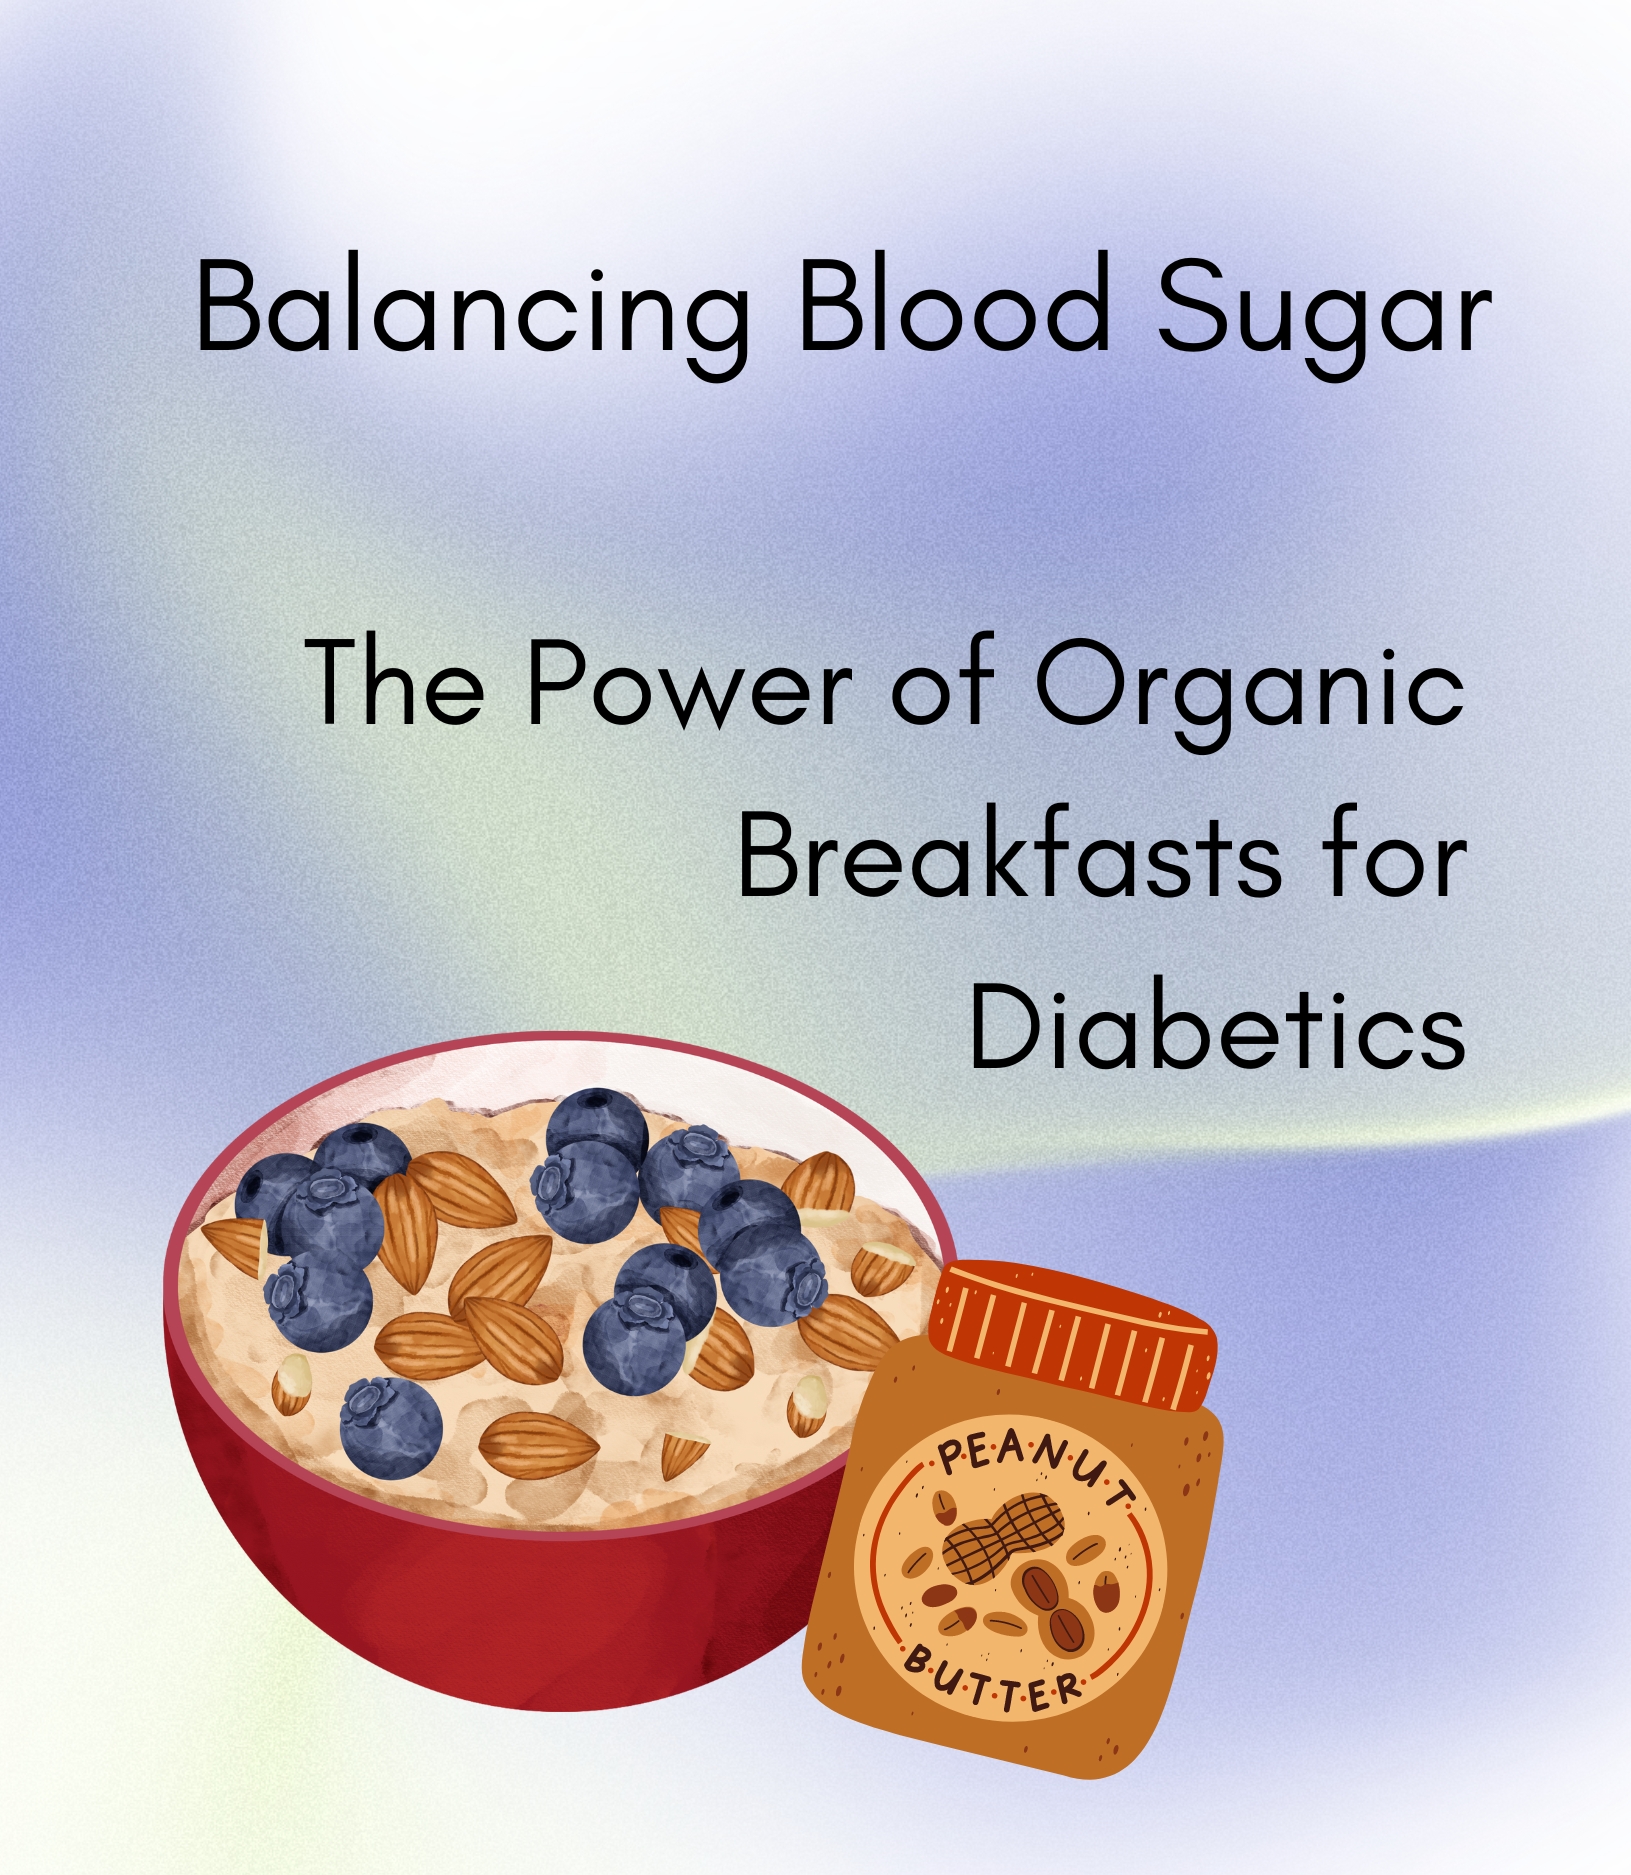 Balancing Blood Sugar: The Power of Organic Breakfasts for Diabetics